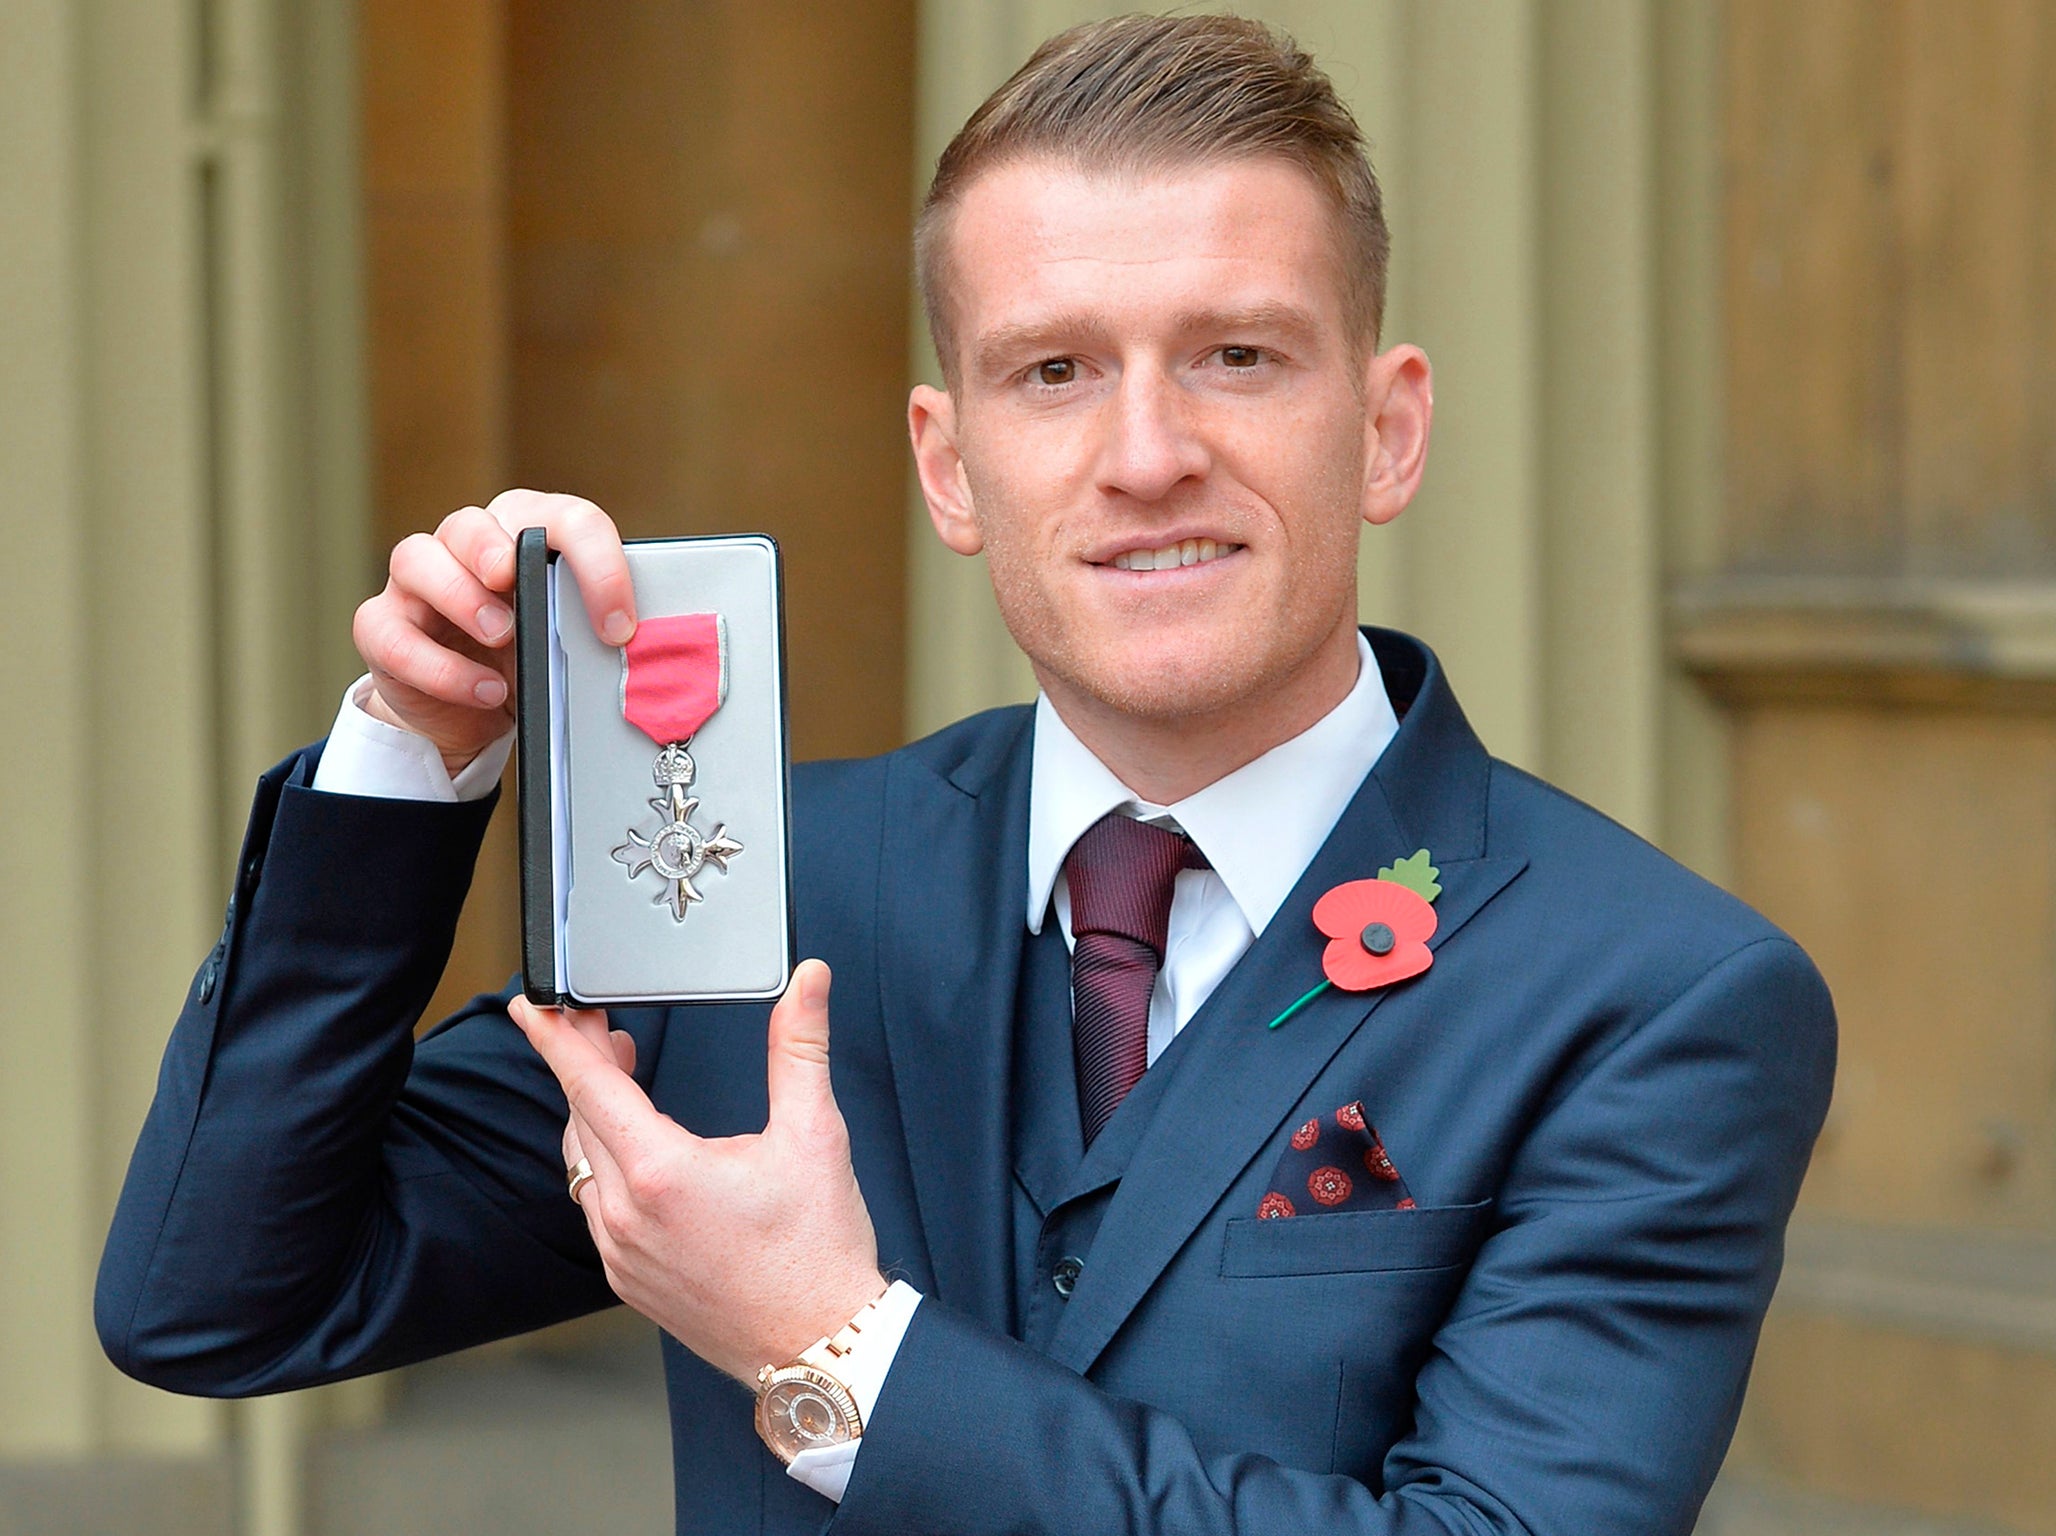 Davis receiving his MBE at Buckingham Palace last week